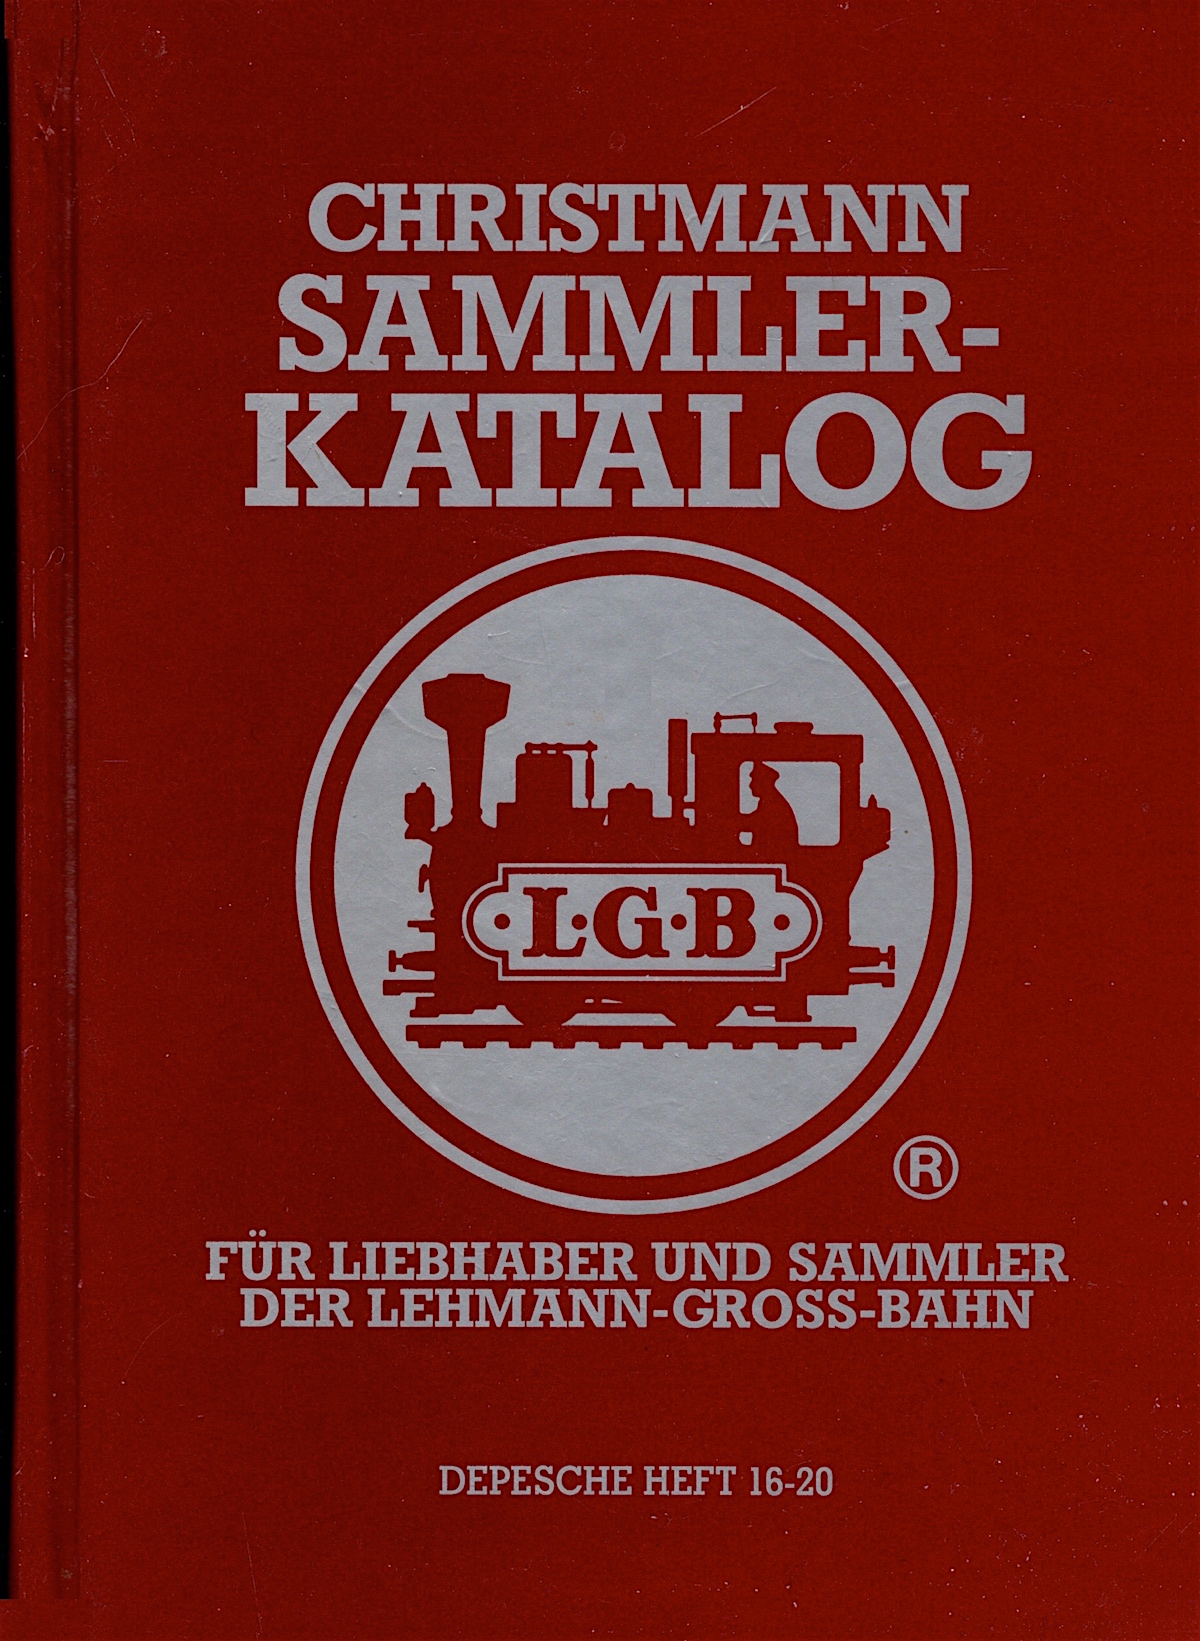 LGB Sammler Katalog (Collector Catalogue) - 2002 Christmann